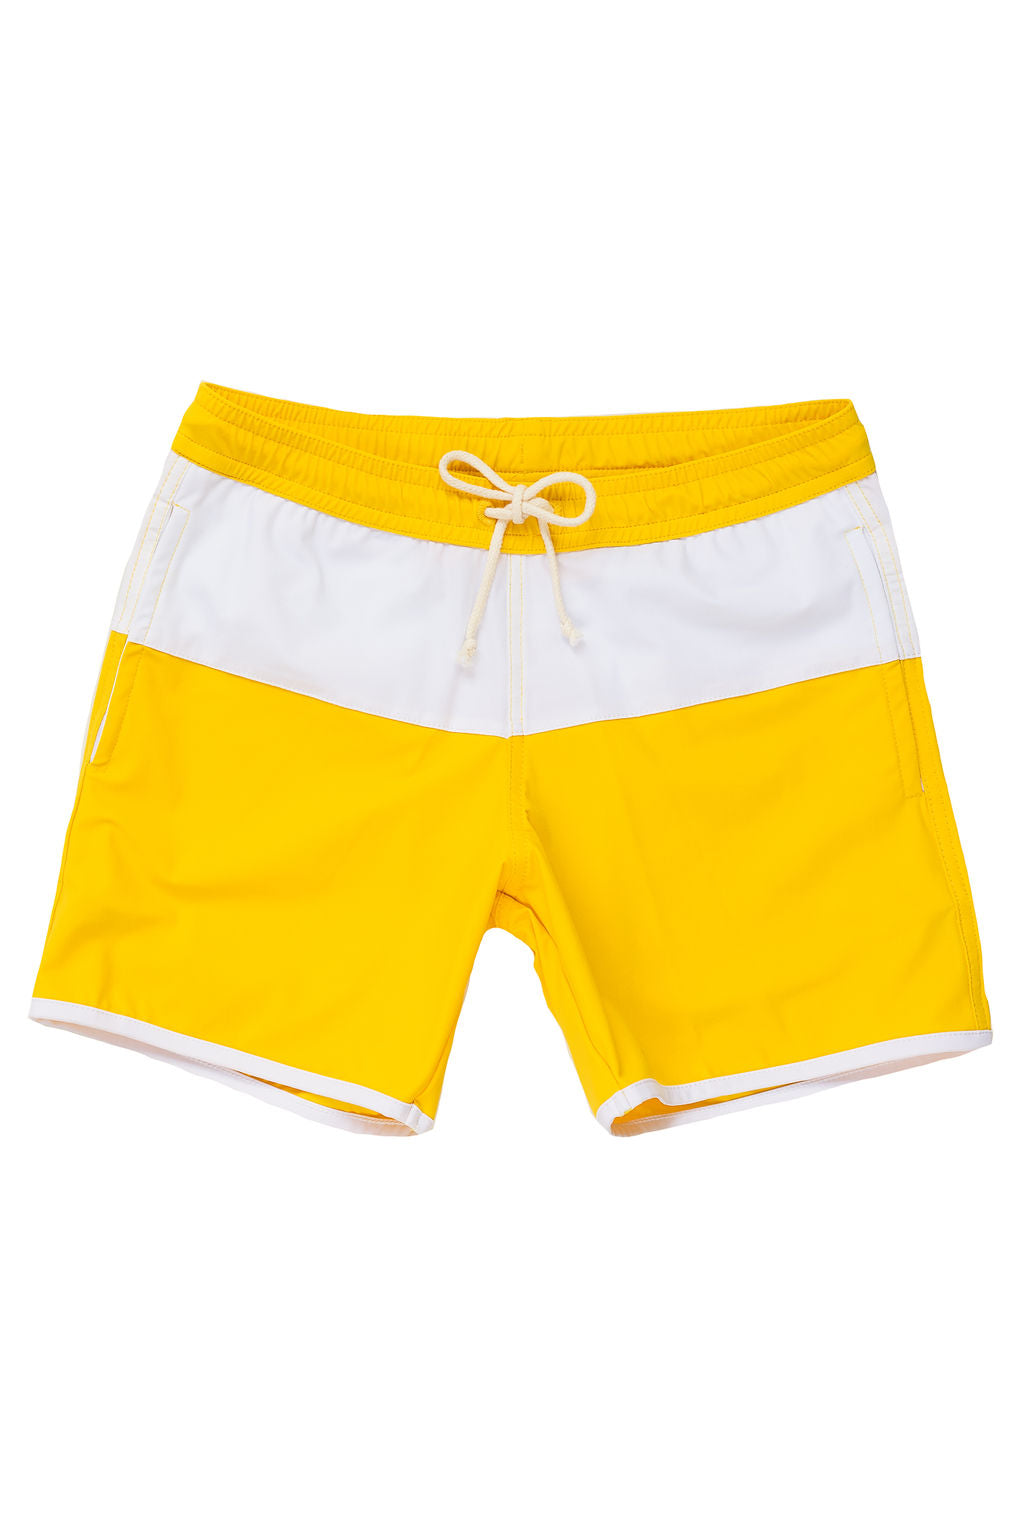 Swimshort JACK Sicilian Yellow - ملابس السباحة